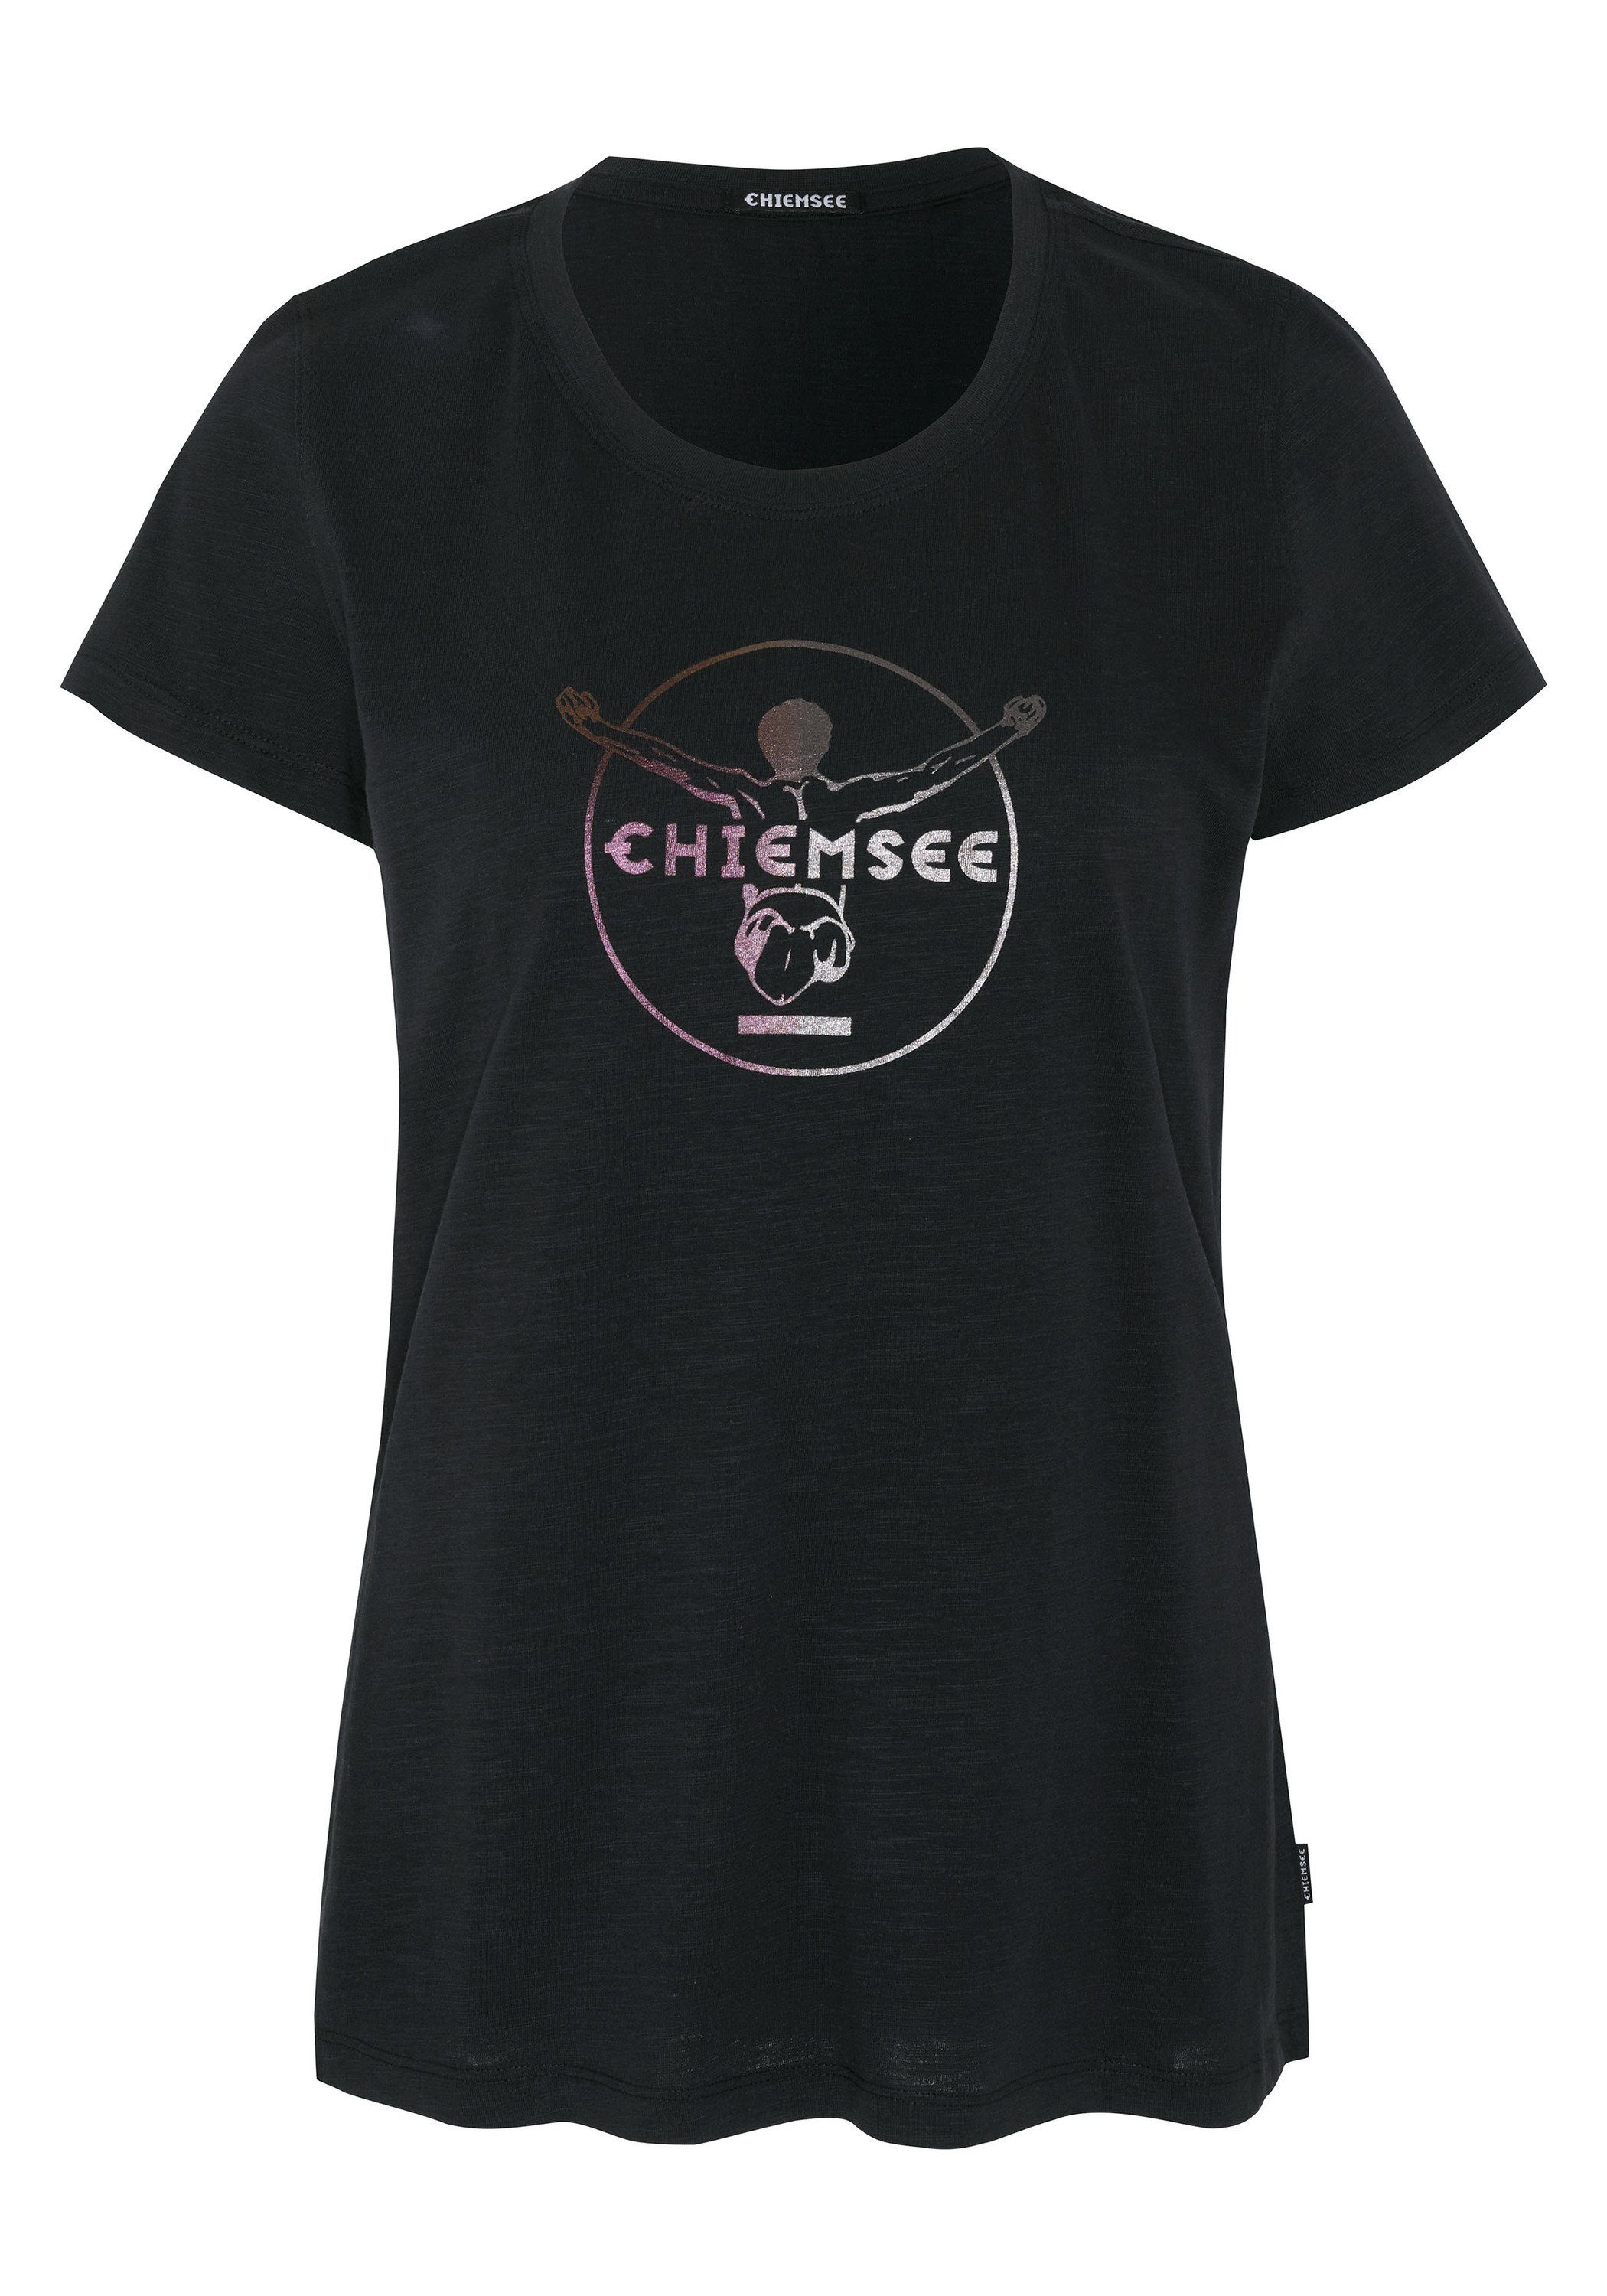 Chiemsee 19-3911 1 Print-Shirt mit Jumper-Frontprint Black Beauty T-Shirt